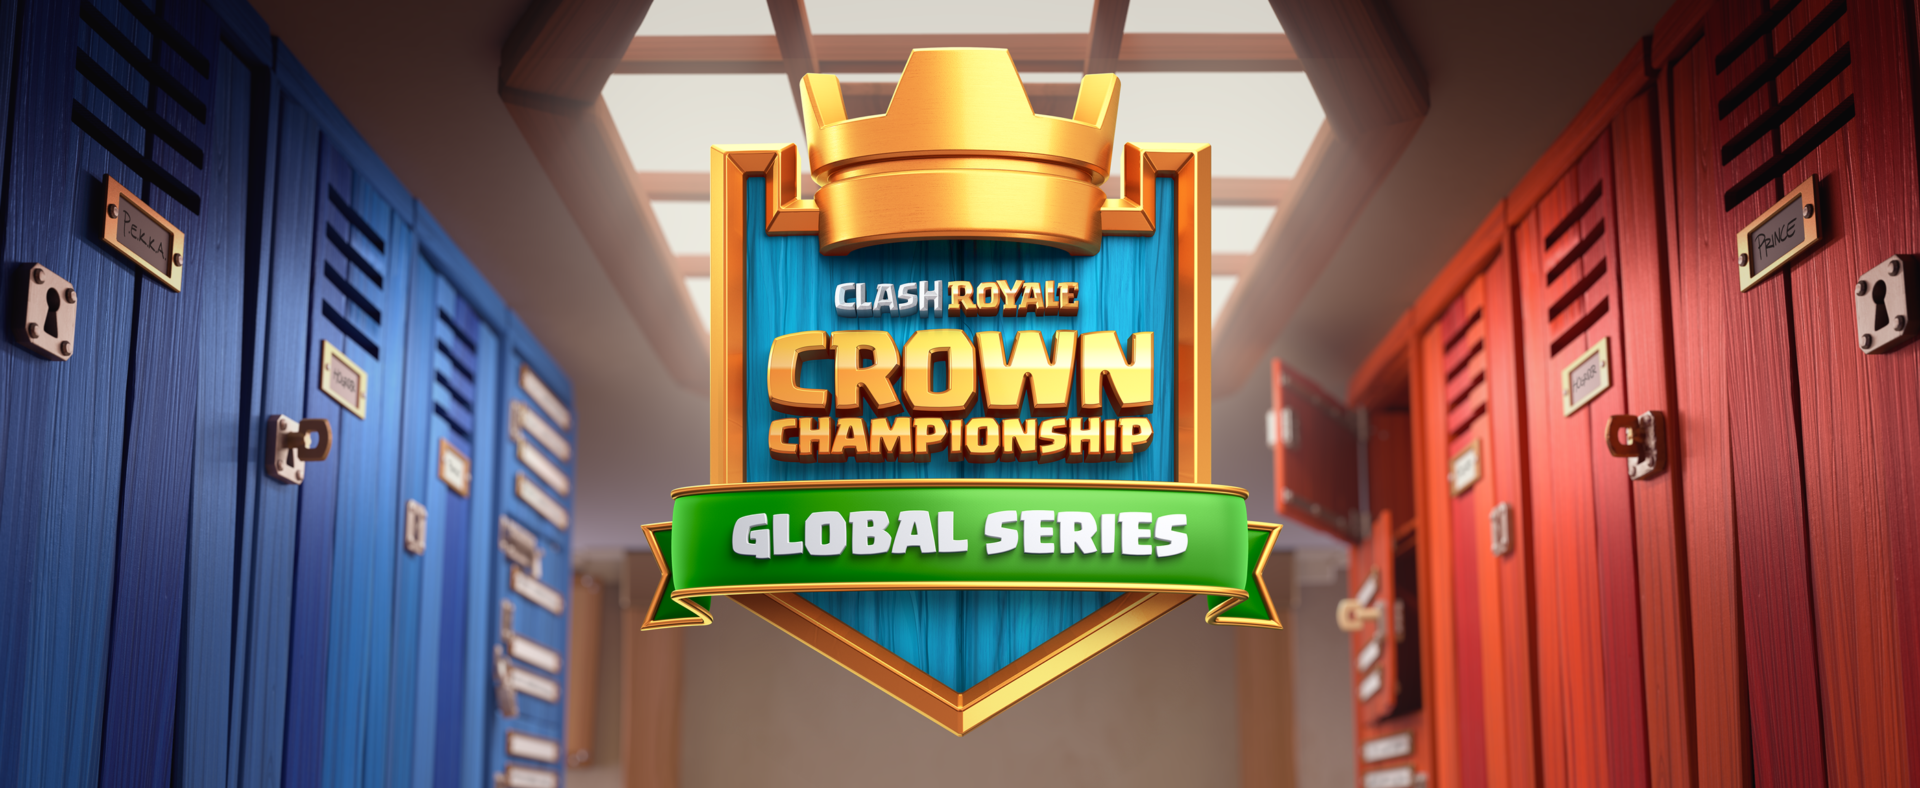 Clash Royale Crown Championship terá final latino-americana no Brasil